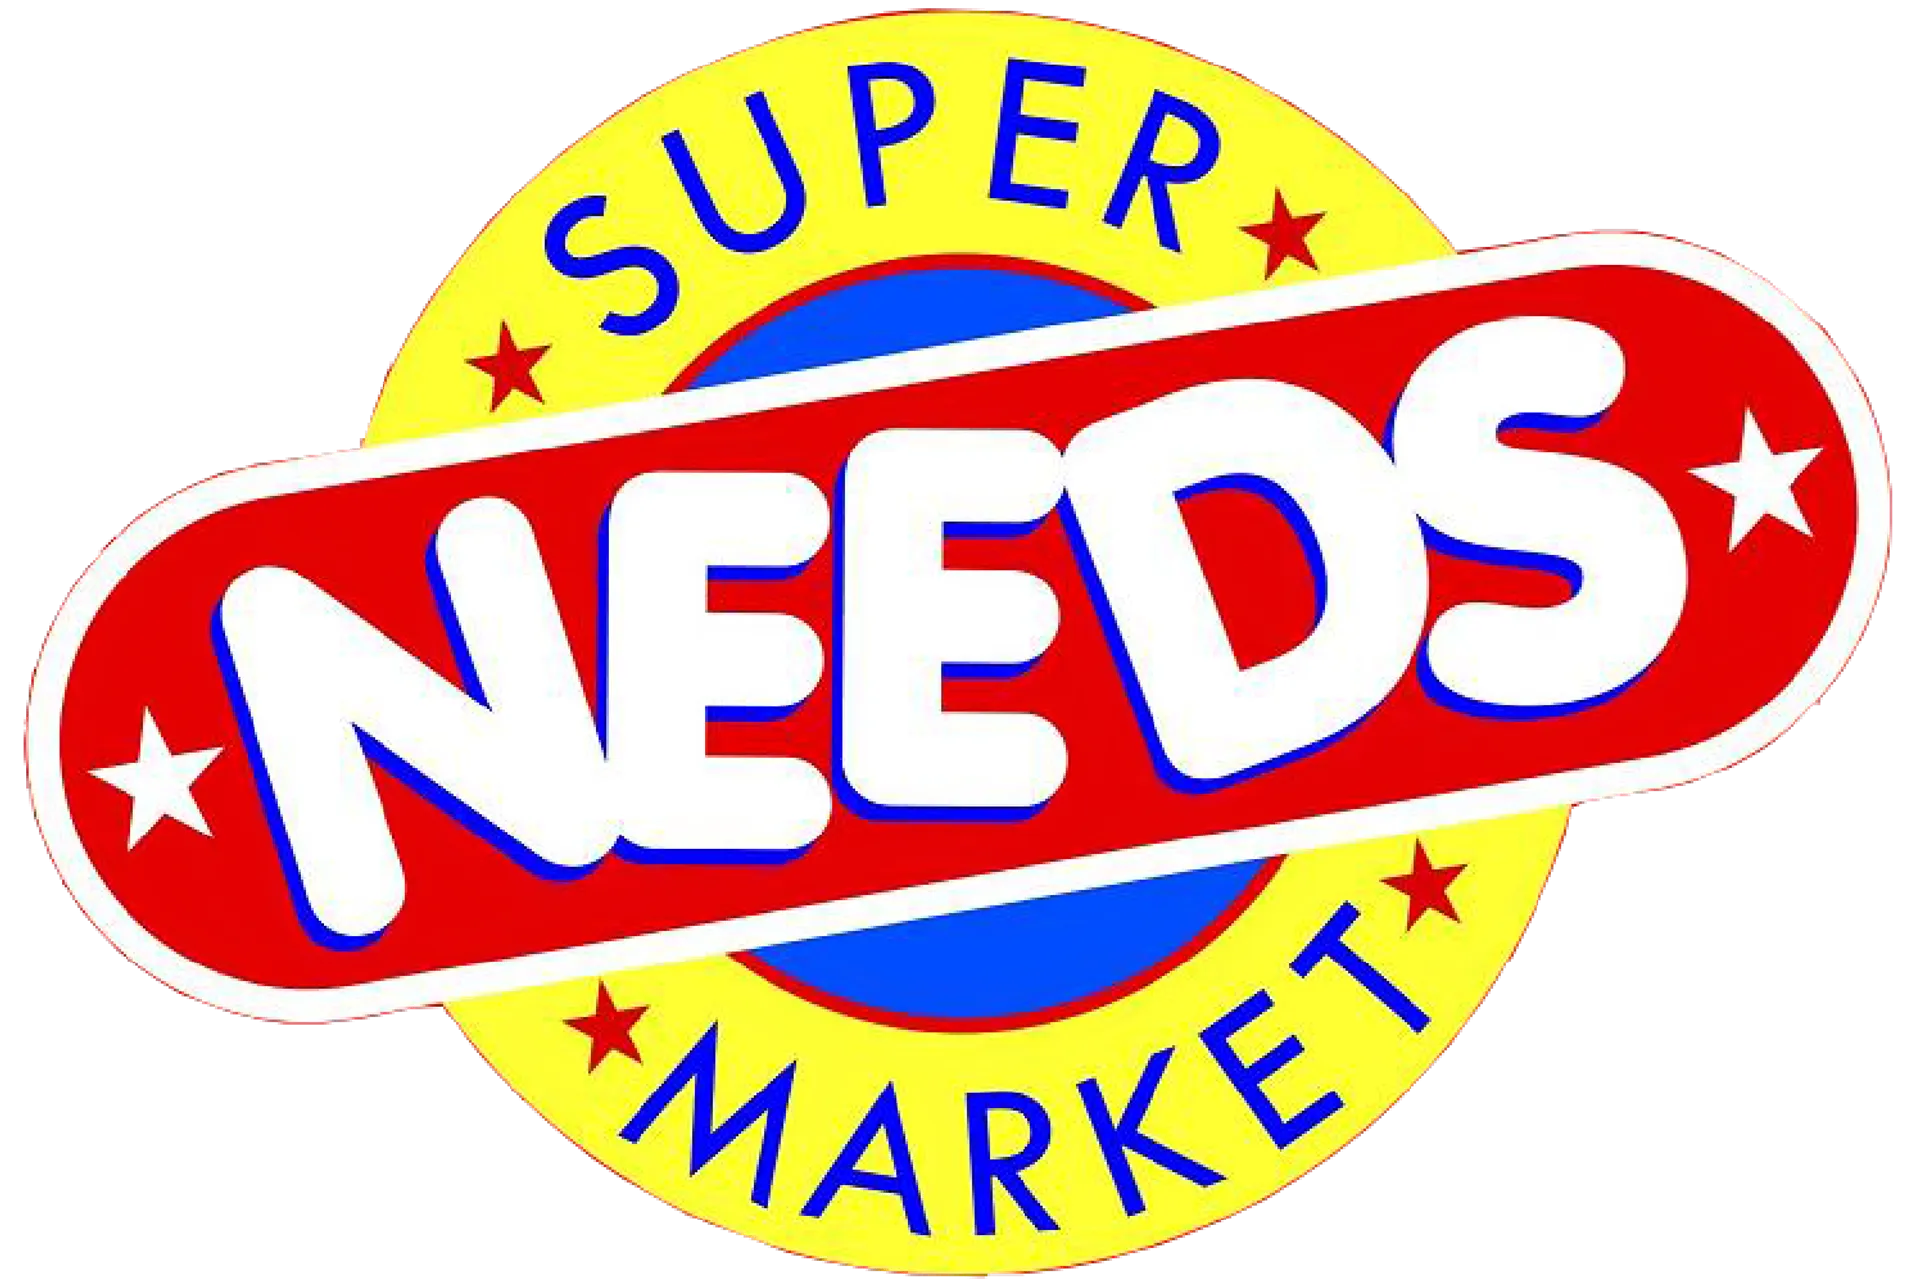 NEED SUPERMARKET logo. Current catalogue